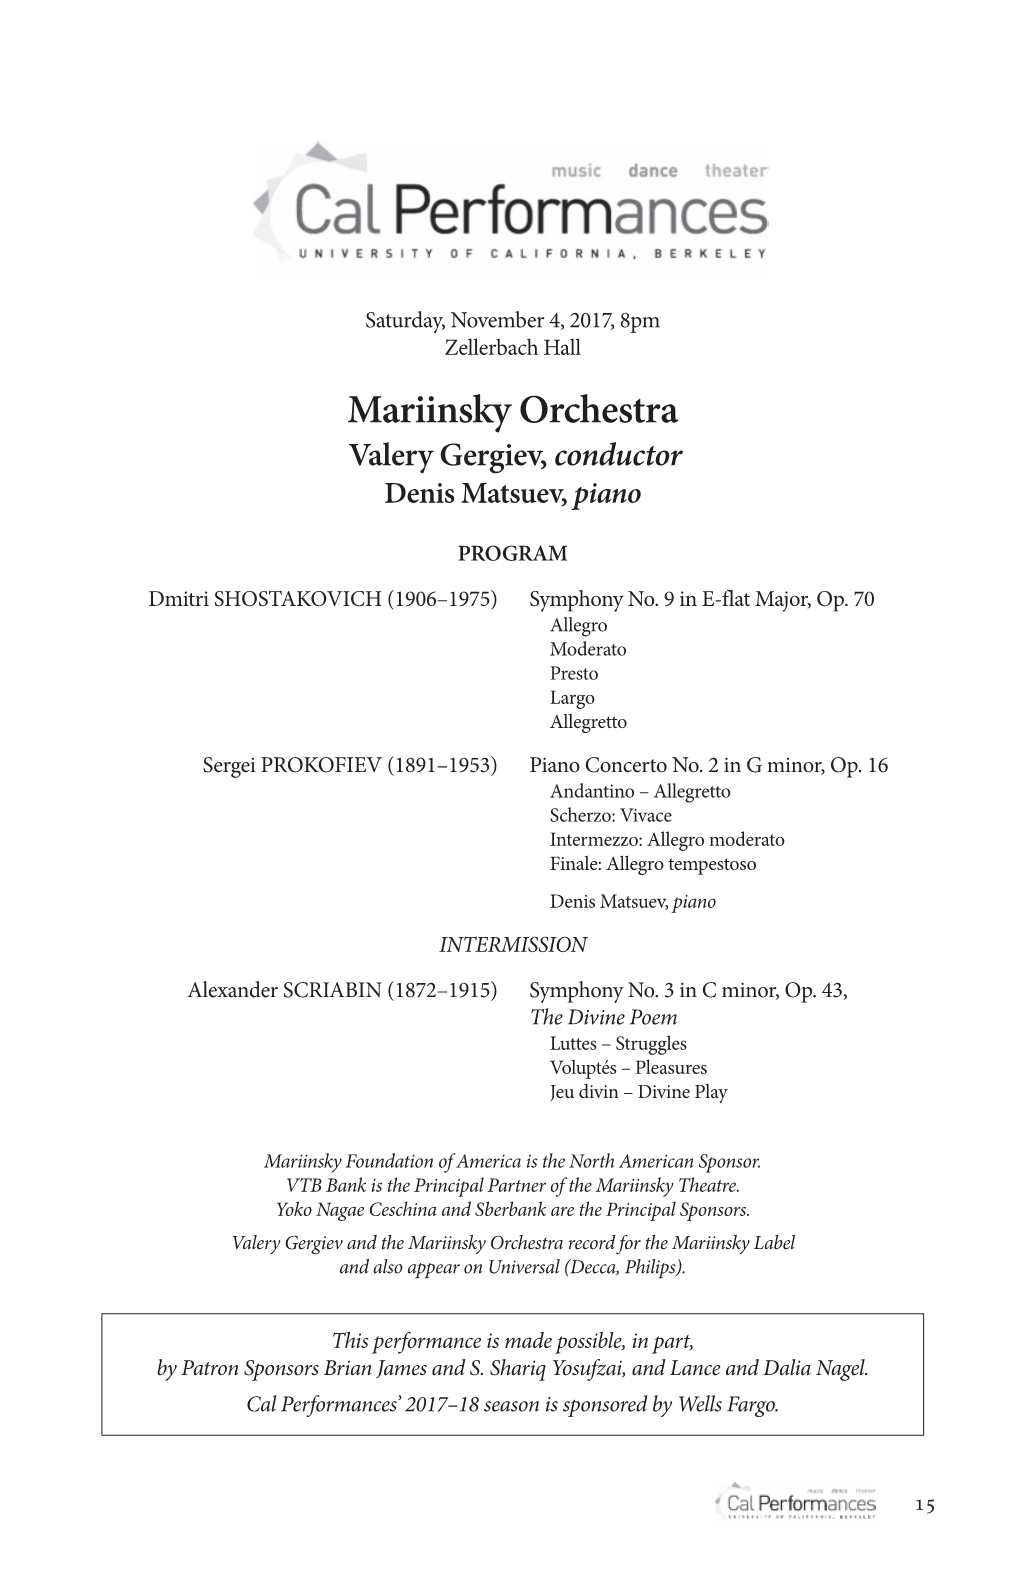 Mariinsky Orchestra Valery Gergiev, Conductor Denis Matsuev, Piano